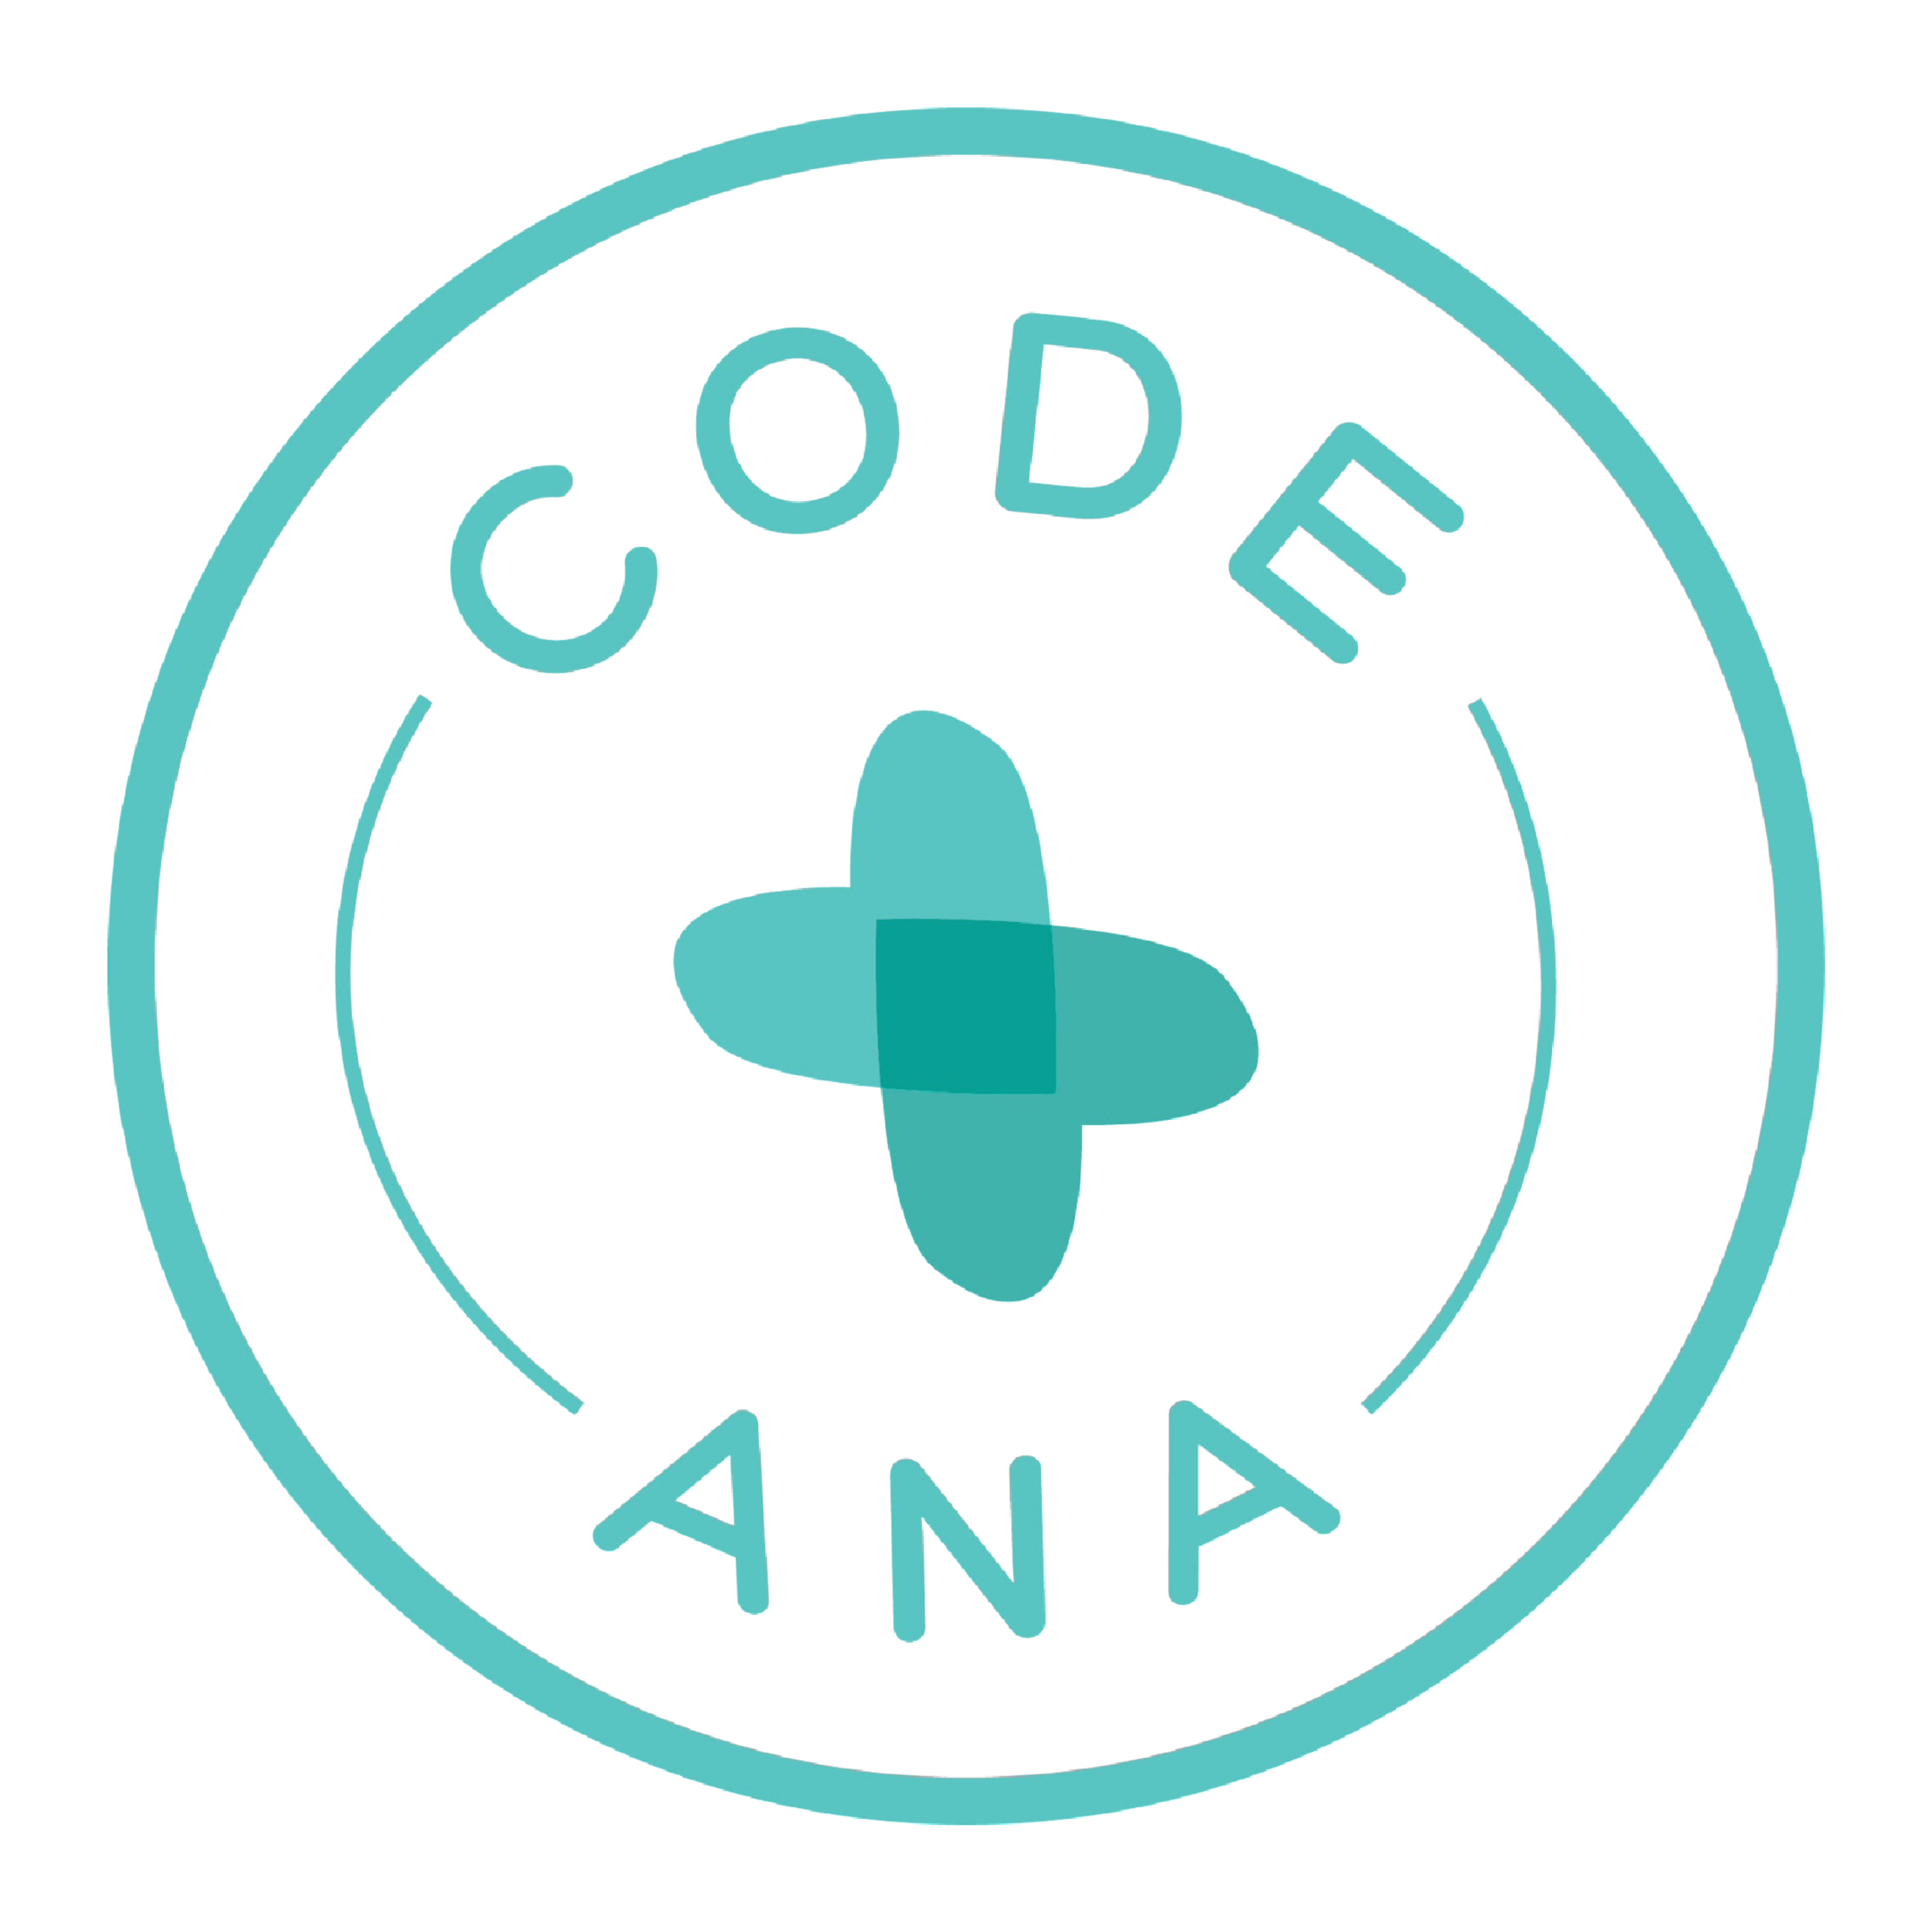 Code Ana